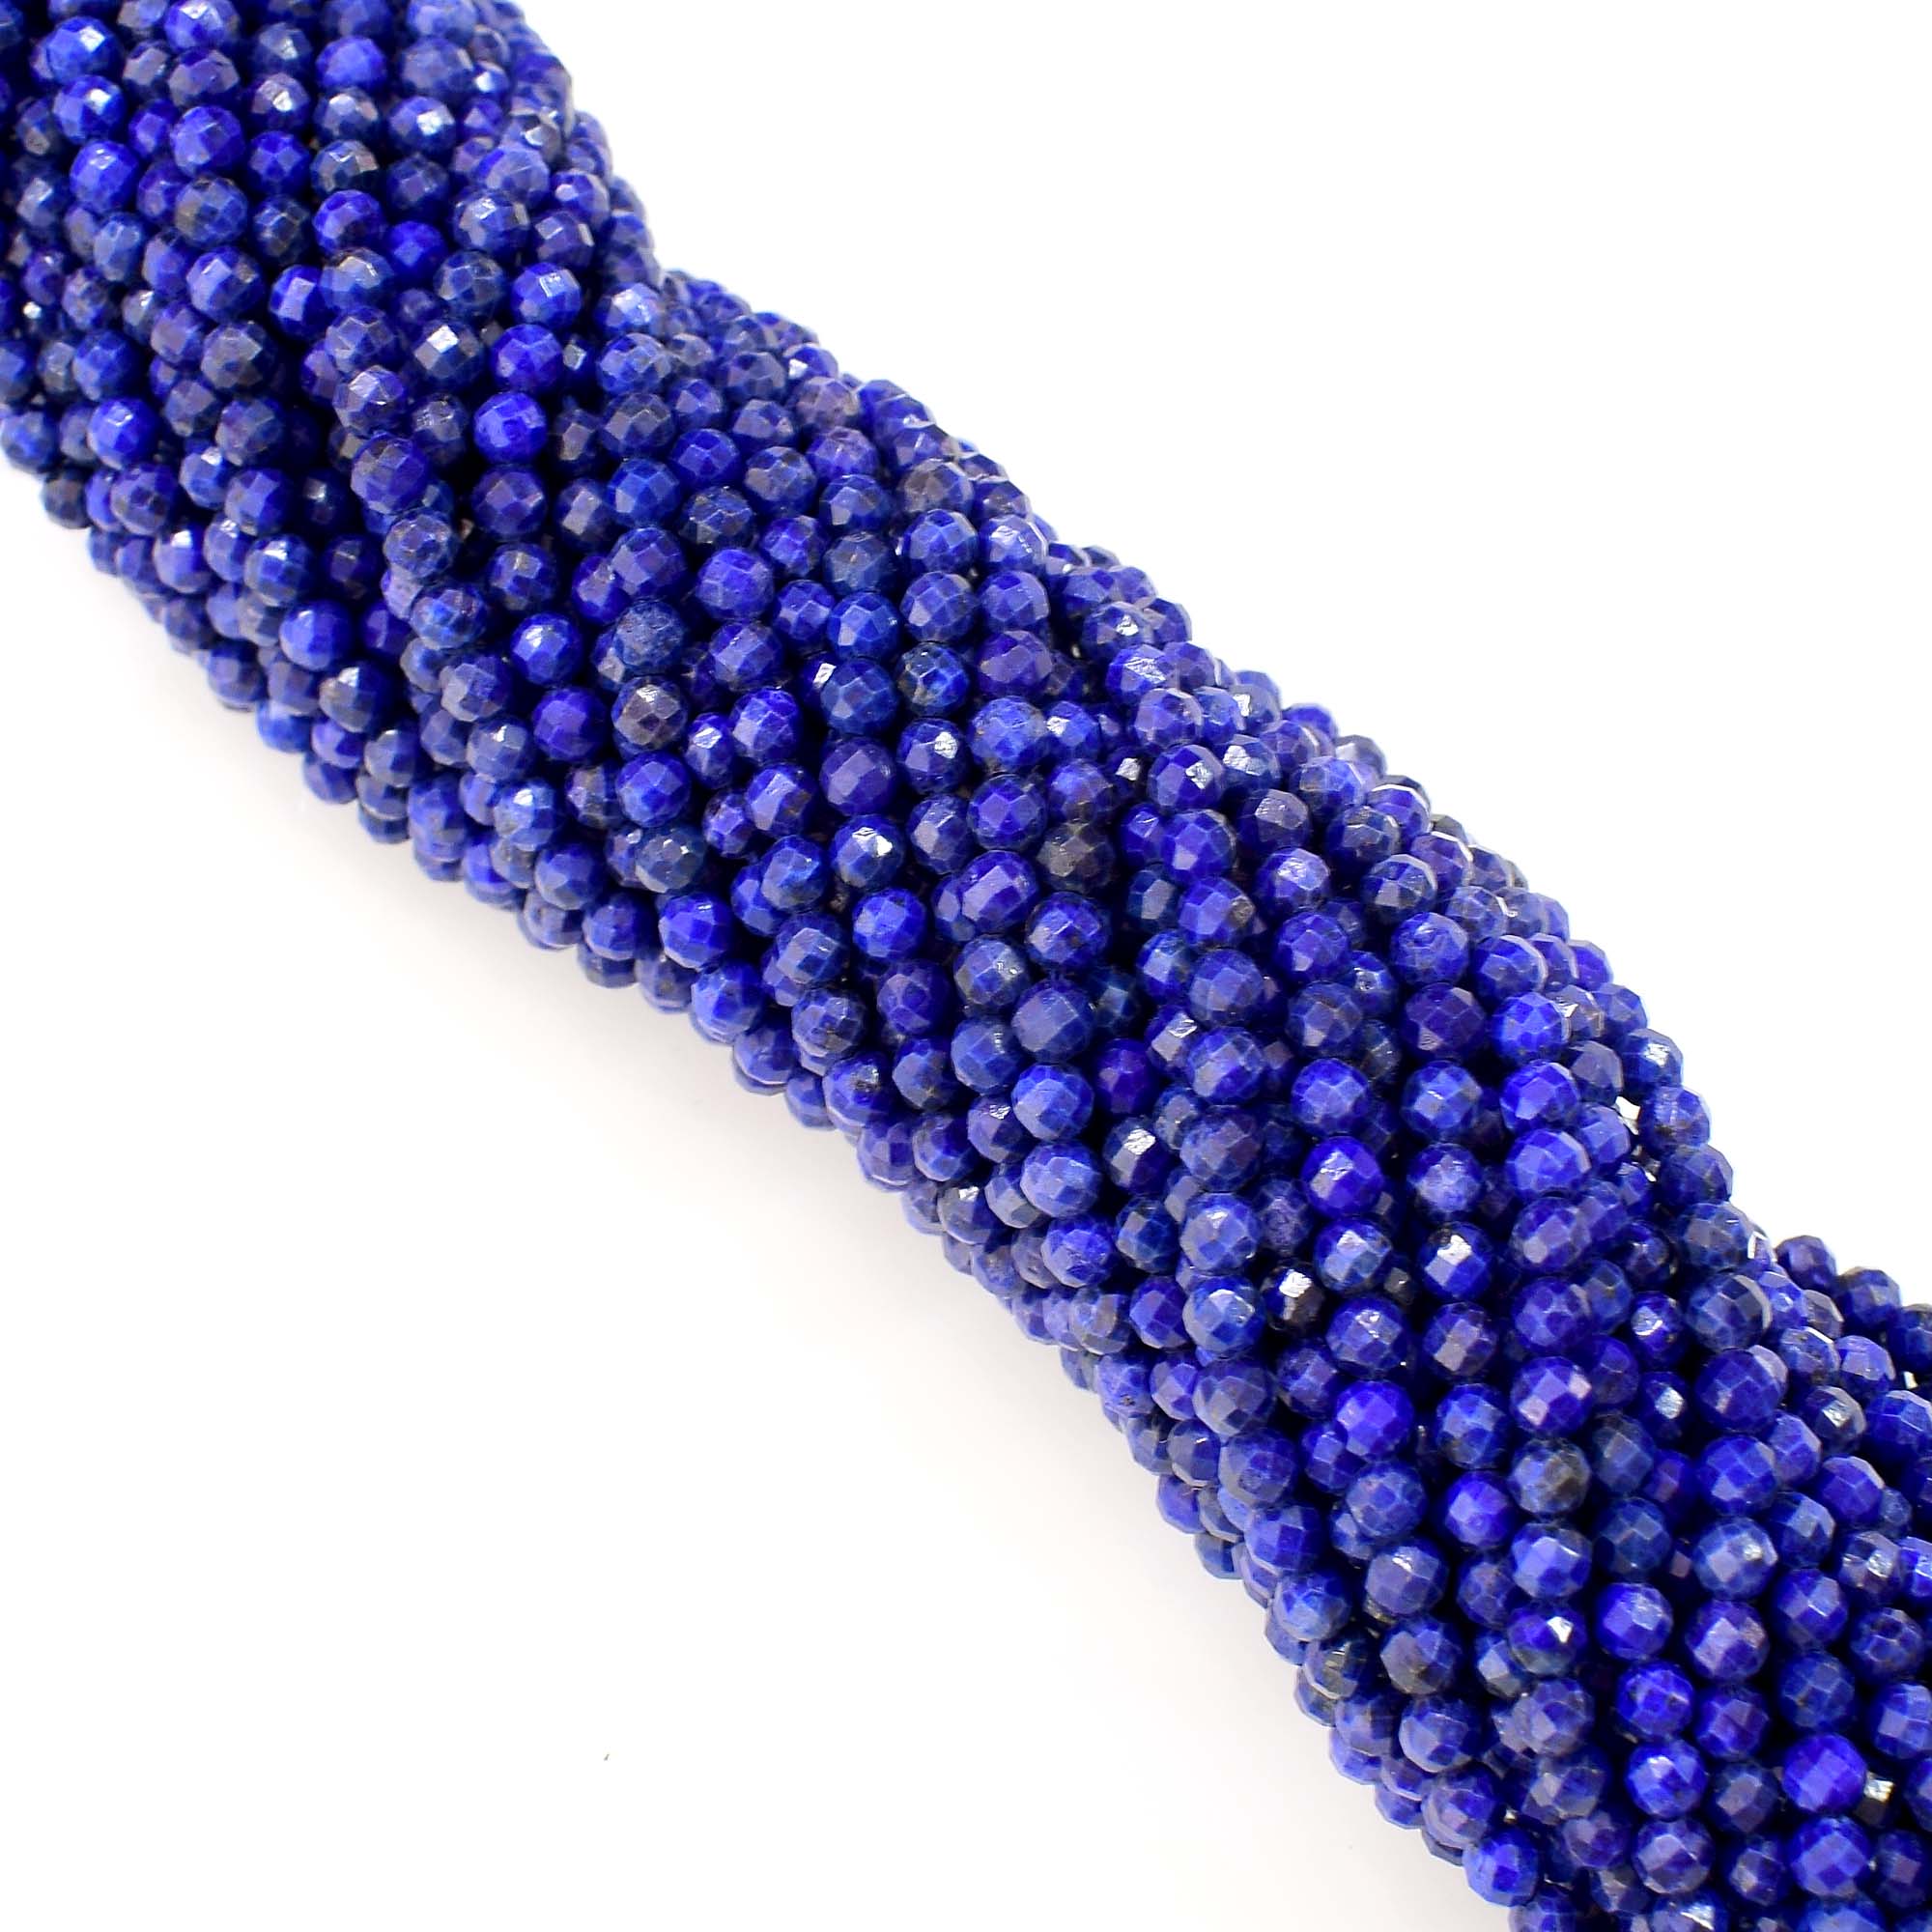 Natural Lapis Lazuli Beads / Round Shape Faceted Lapis / 3-4mm Lapis Gemstone Beads